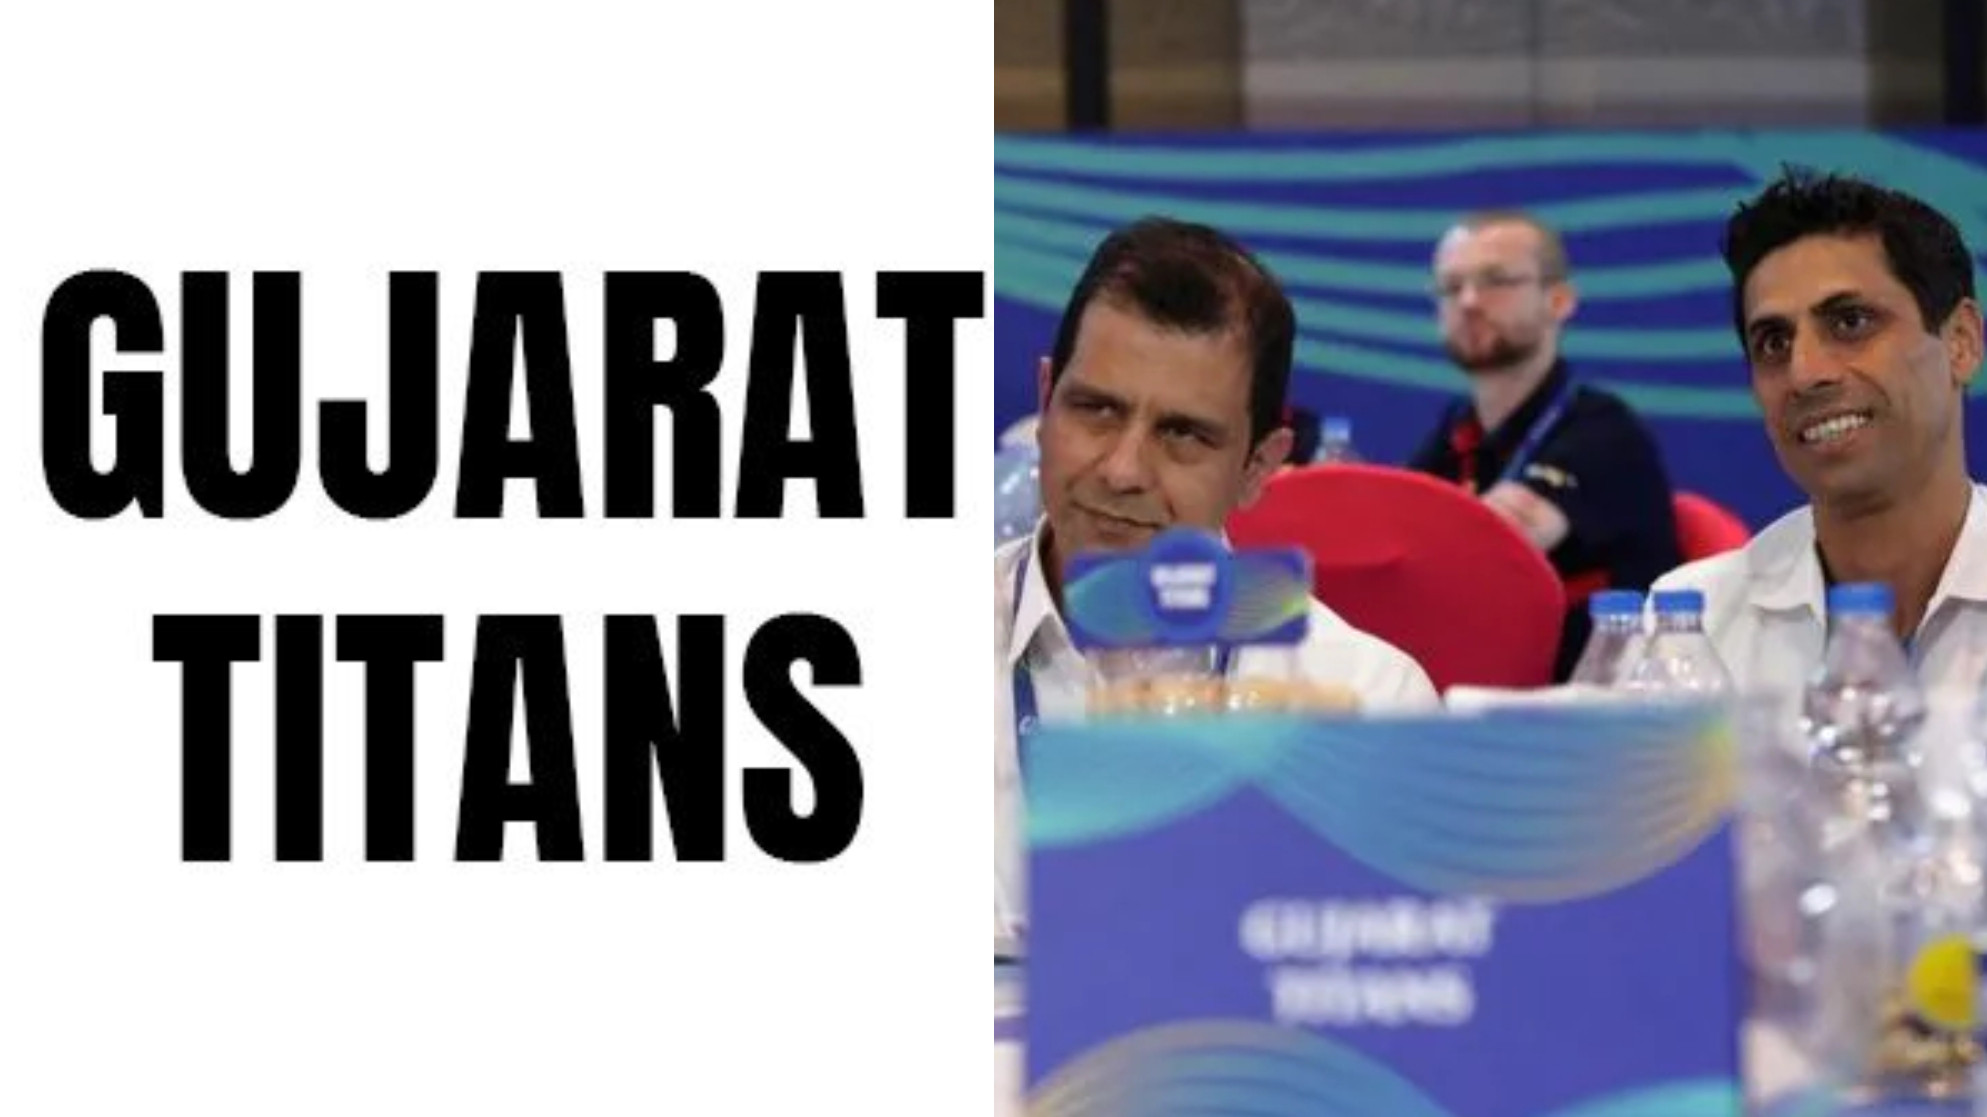 Gujarat Titans reveal their team logo ahead of the IPL 2022 season